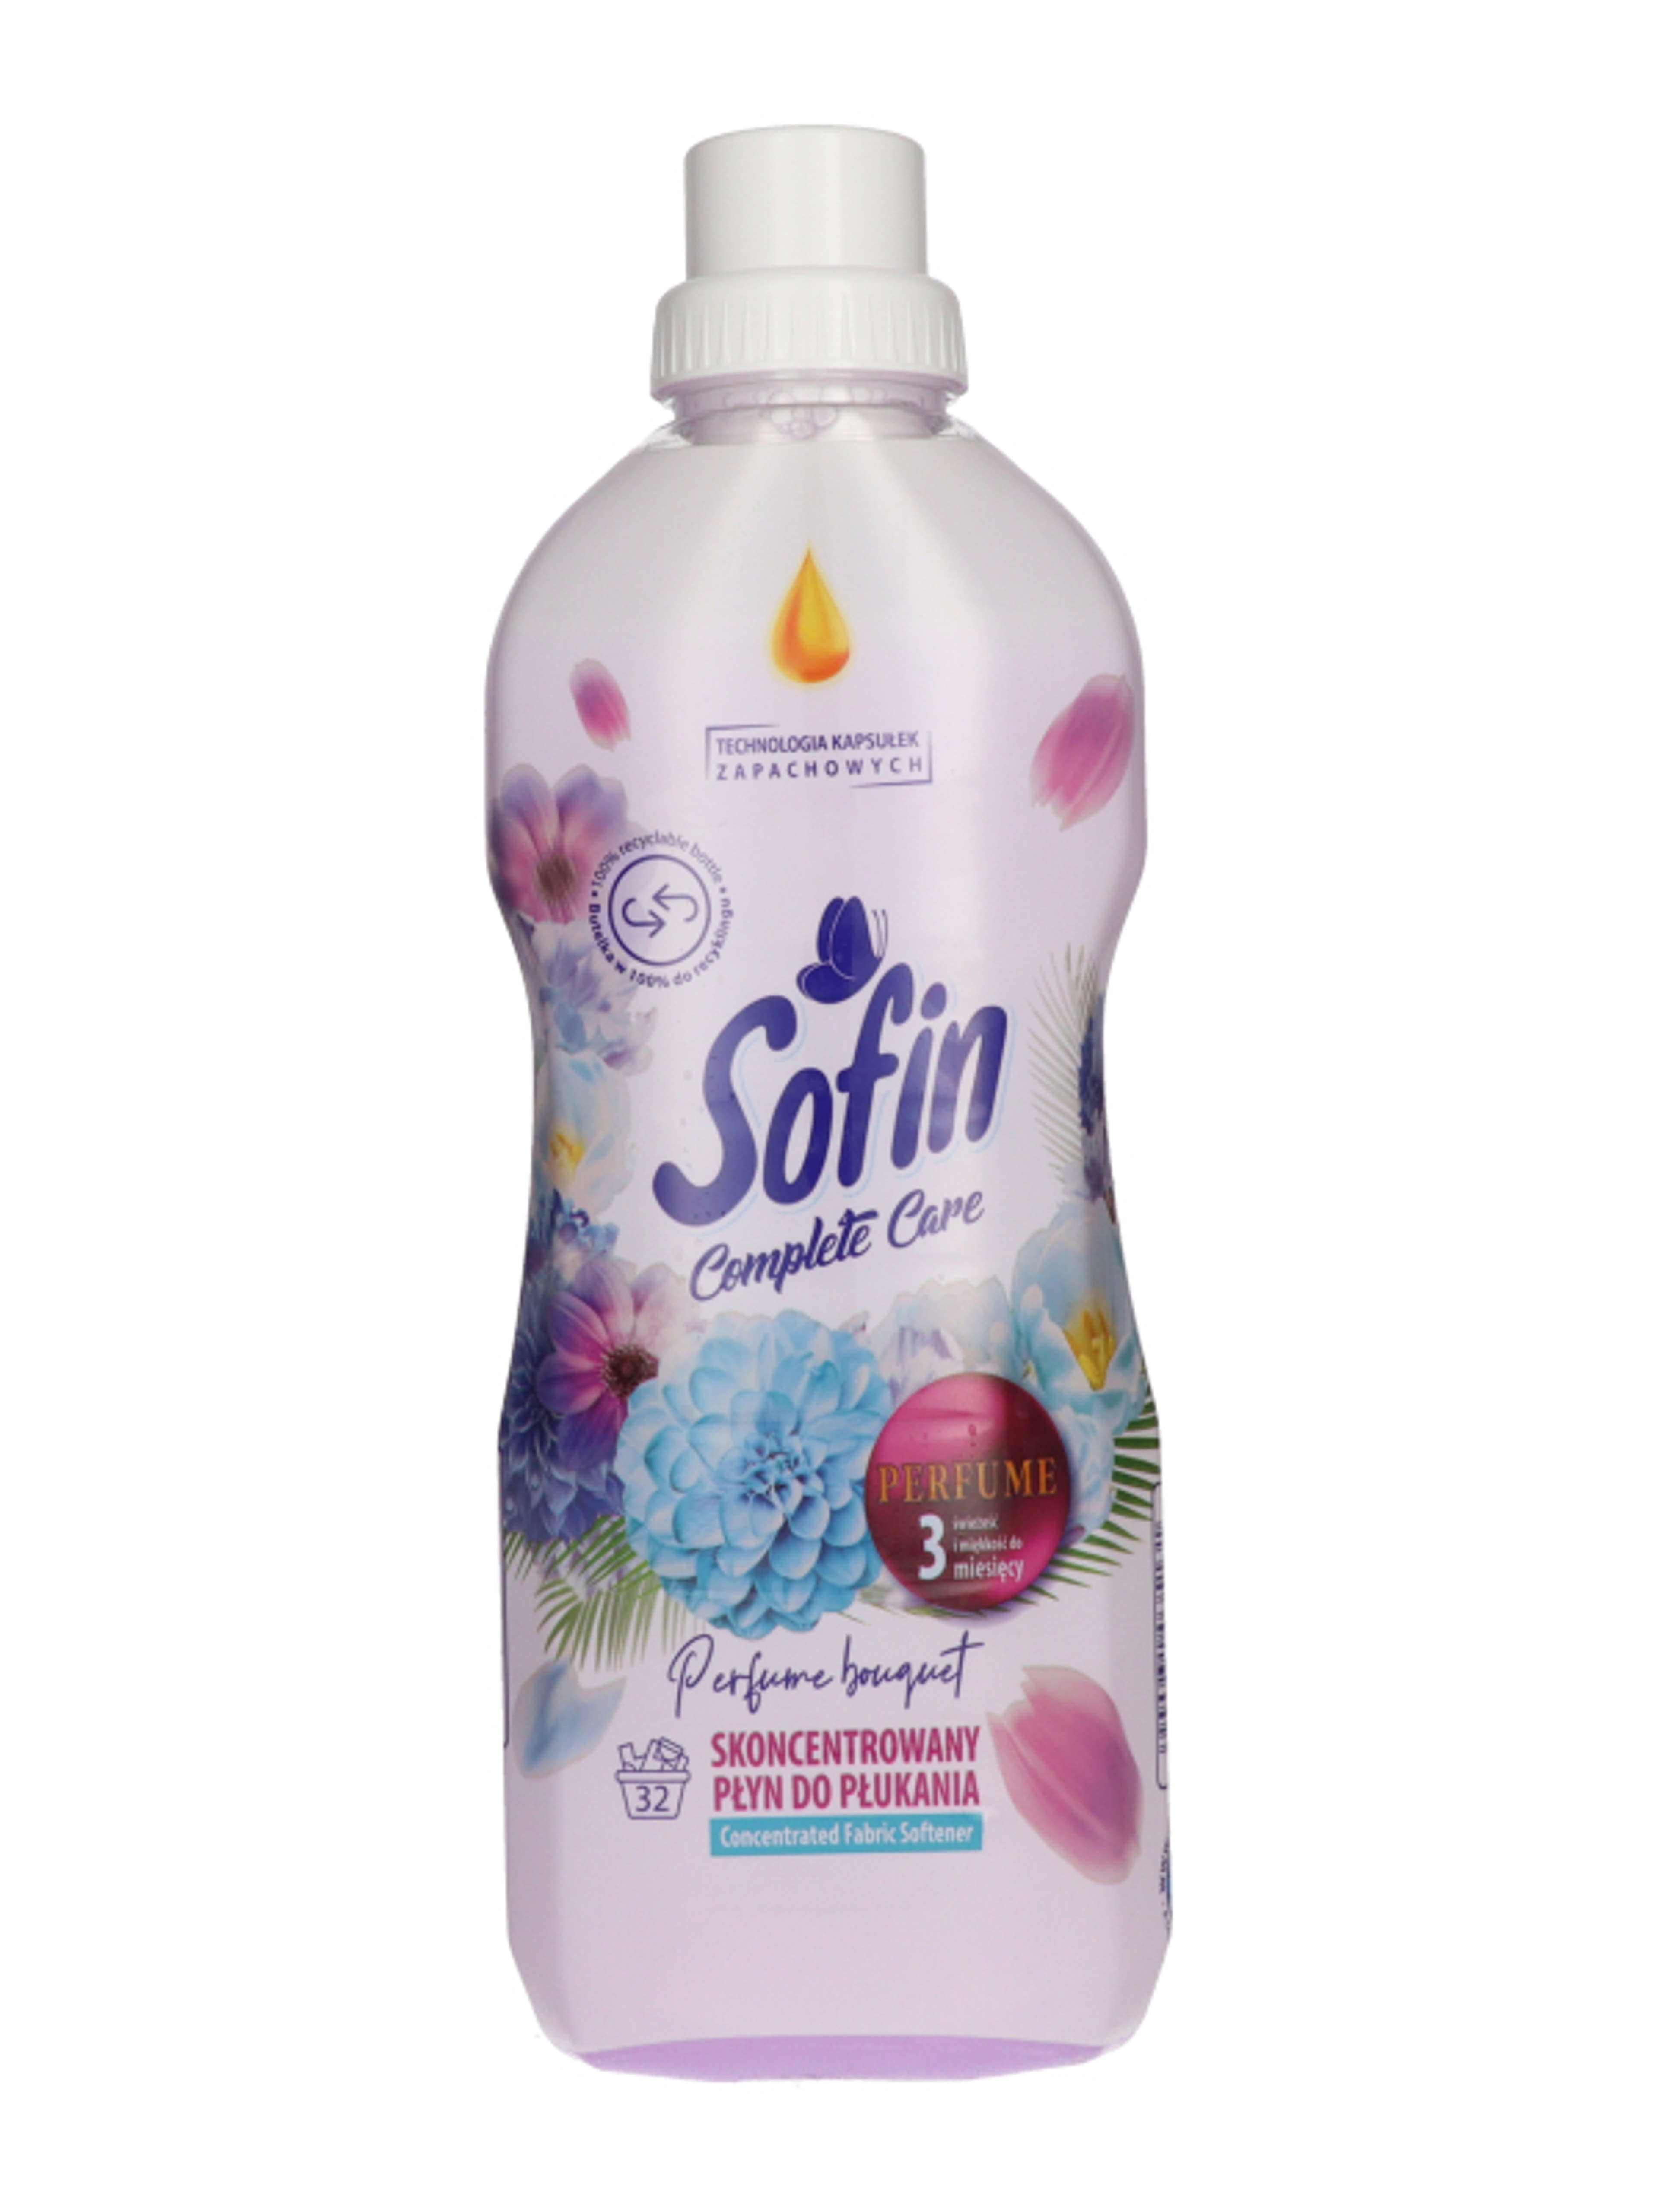 Sofin Complete Care&Perfume Bouquet öblítő - 800 ml-2